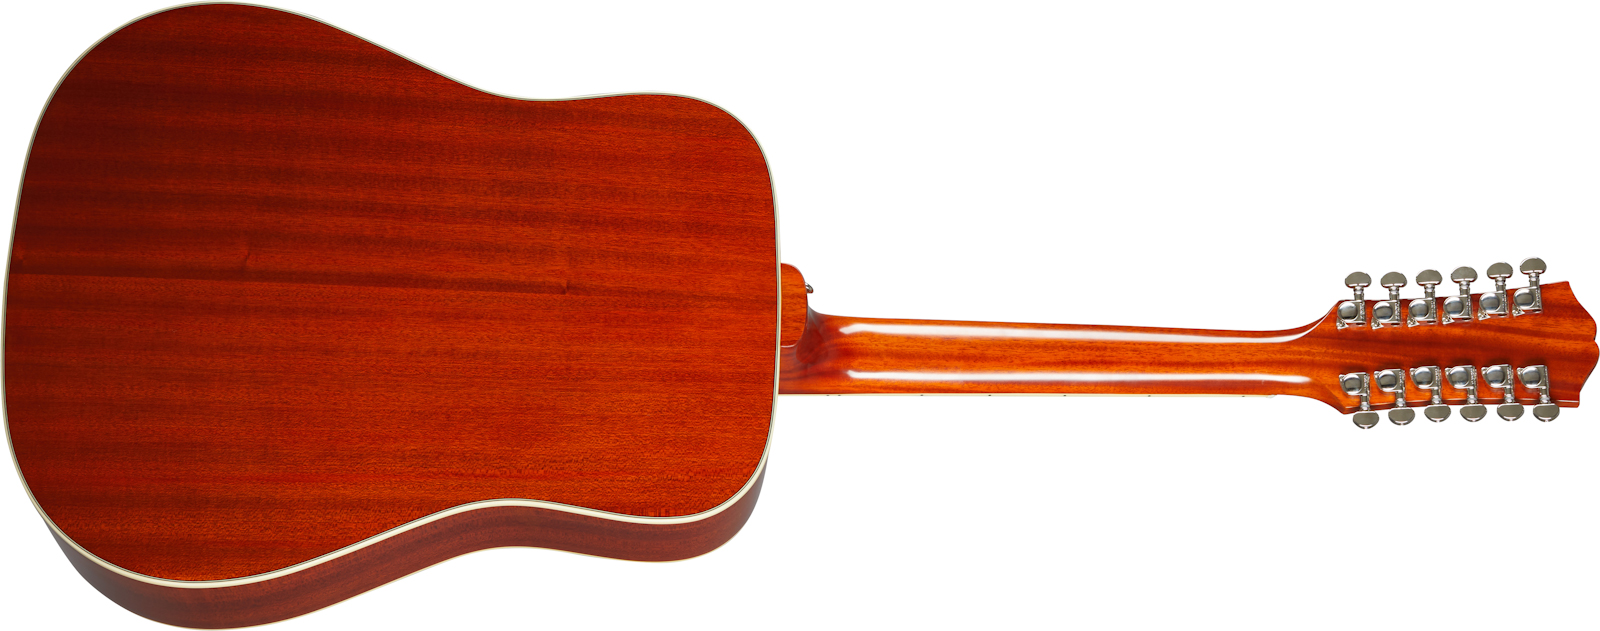 Epiphone Hummingbird 12-string Inspired By Gibson Dreadnought 12c Epicea Acajou Lau - Aged Cherry Sunburst - Guitarra electro acustica - Variation 1